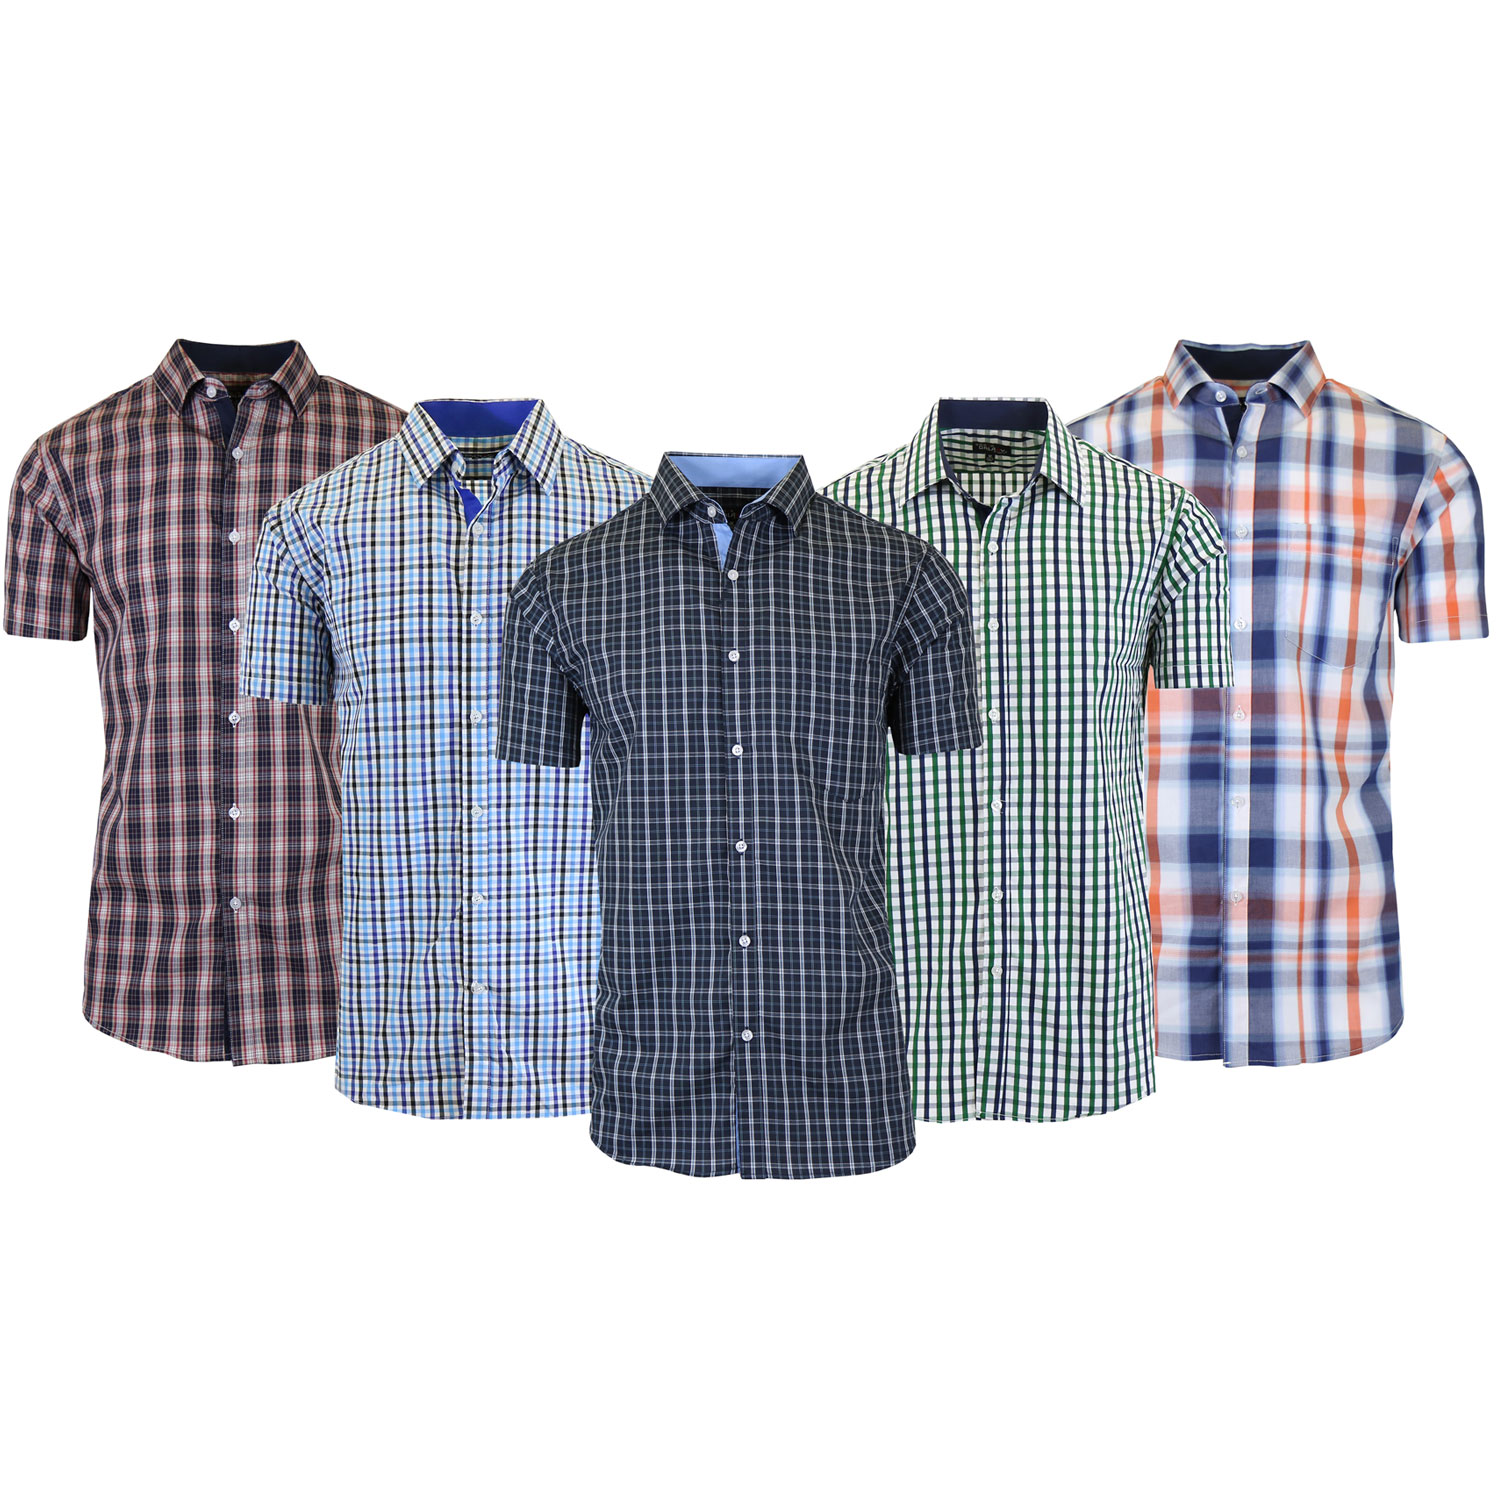 Men's 4 Pack Assorted Short Sleeve Patterned Dress Shirts